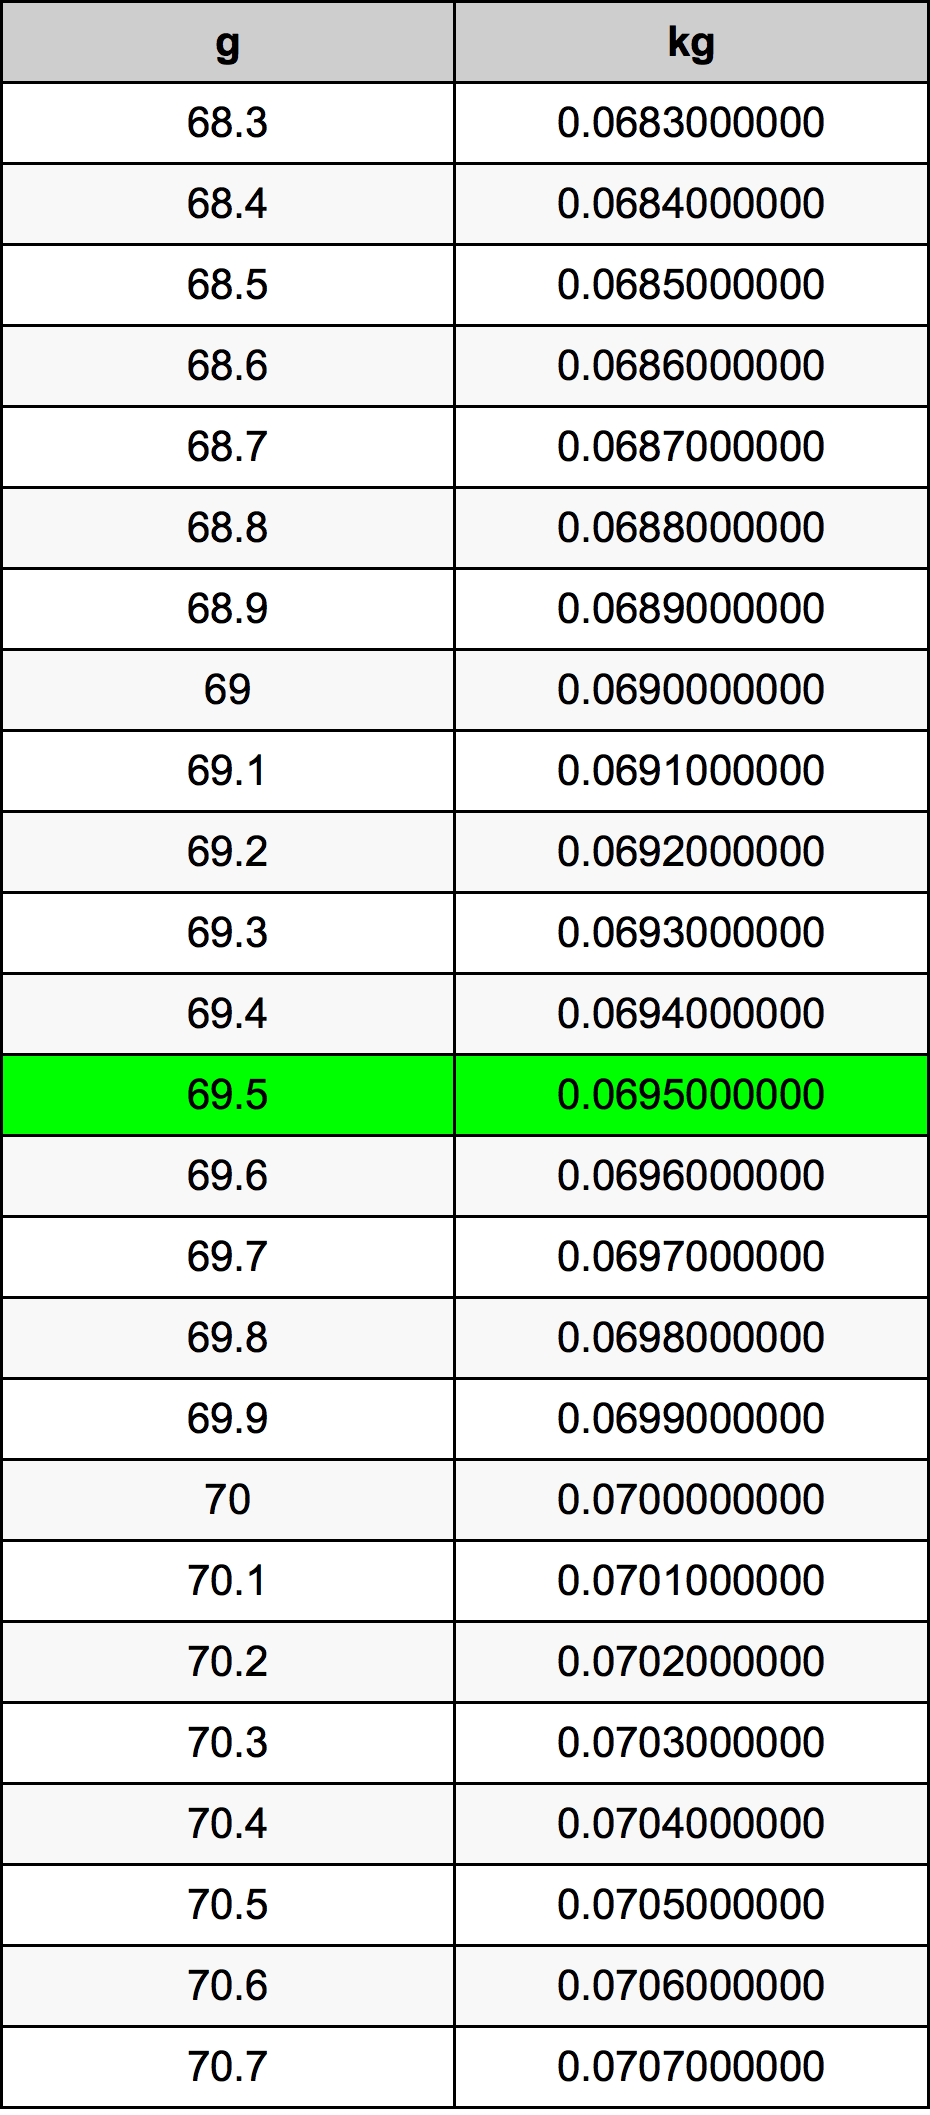 69.5 غرام جدول تحويل